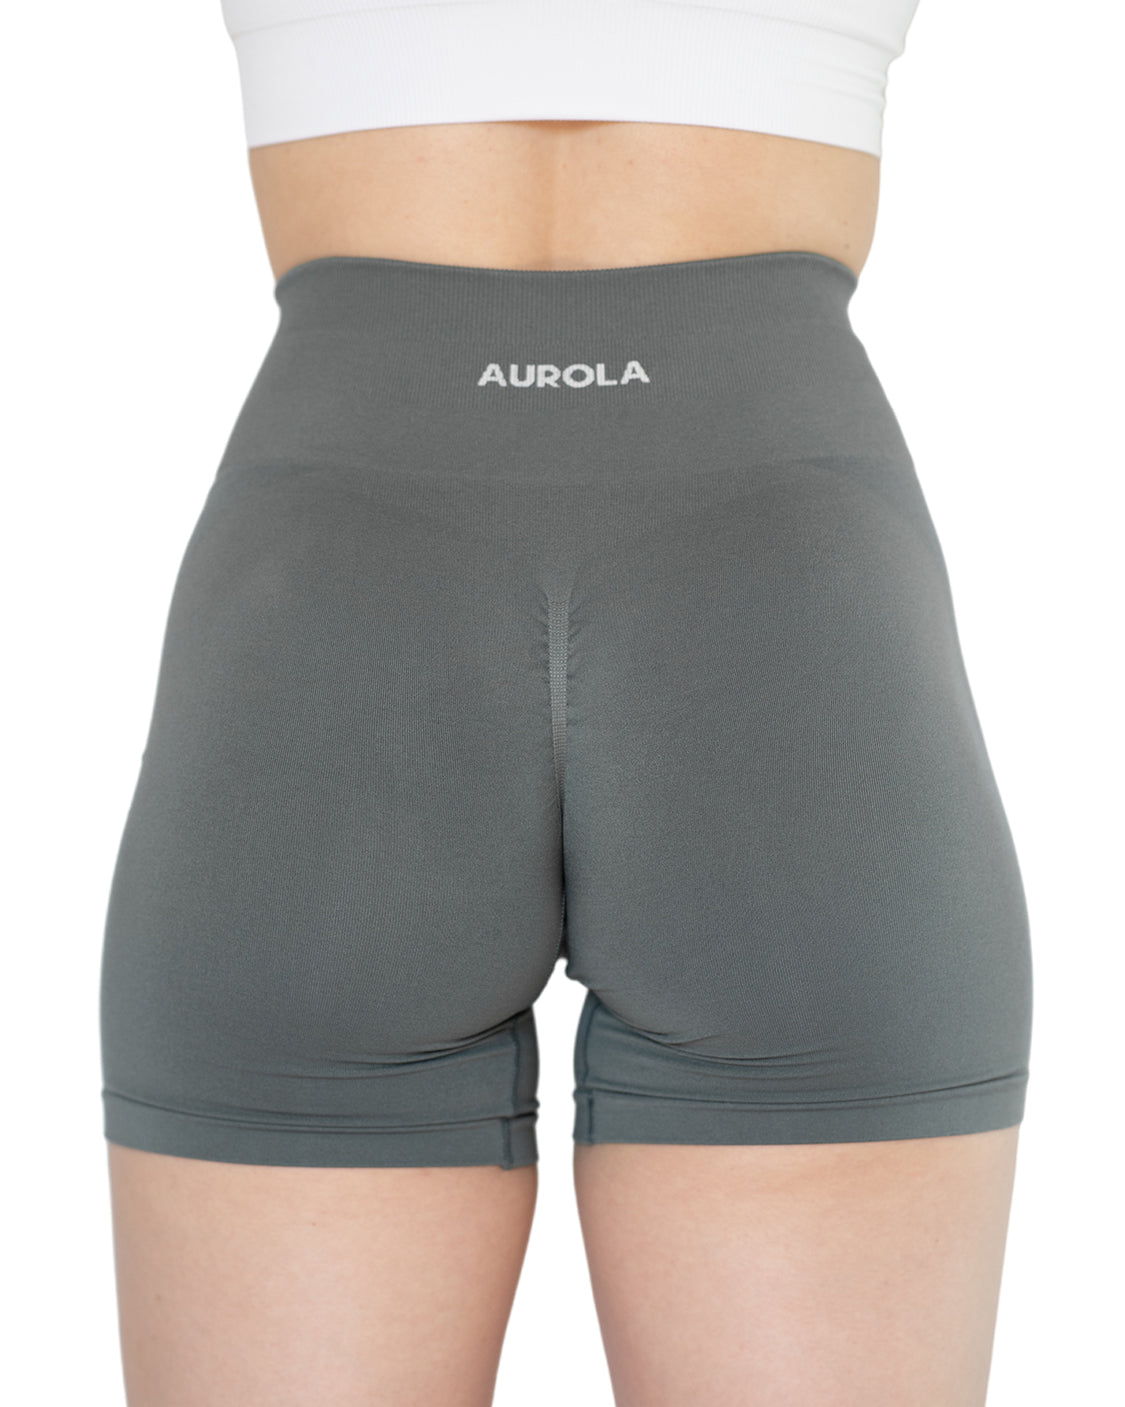 AUROLA-Seamless INTENSIFY Shorts -4.5